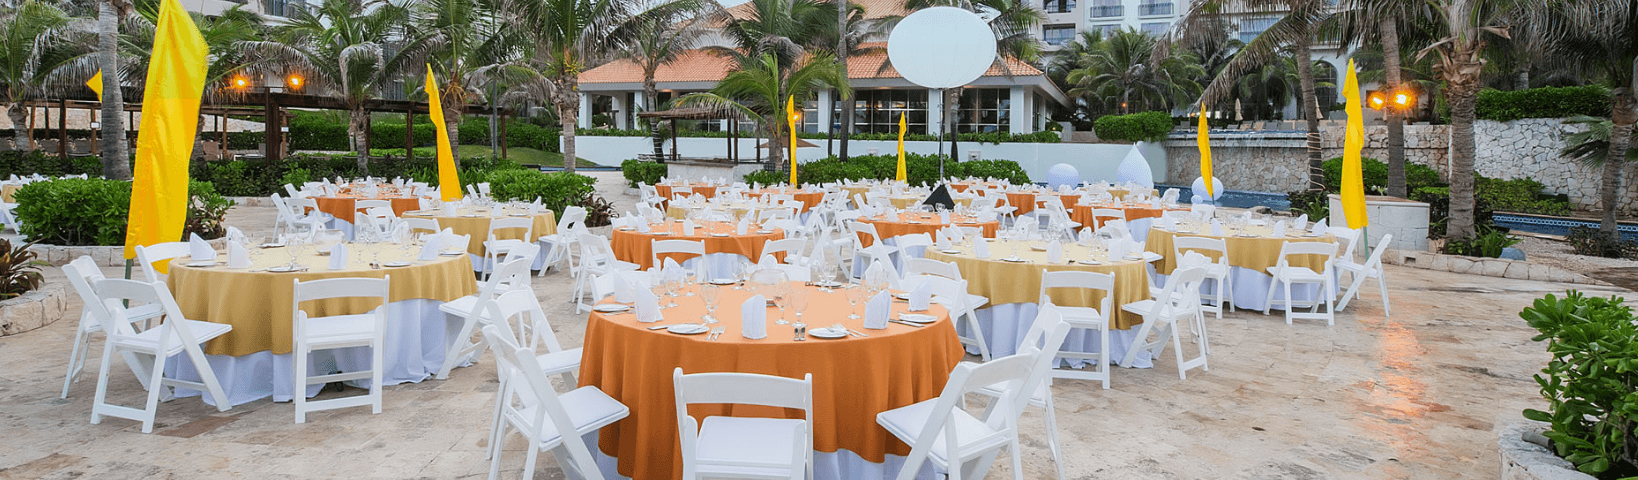 Wedding set up in Cancun